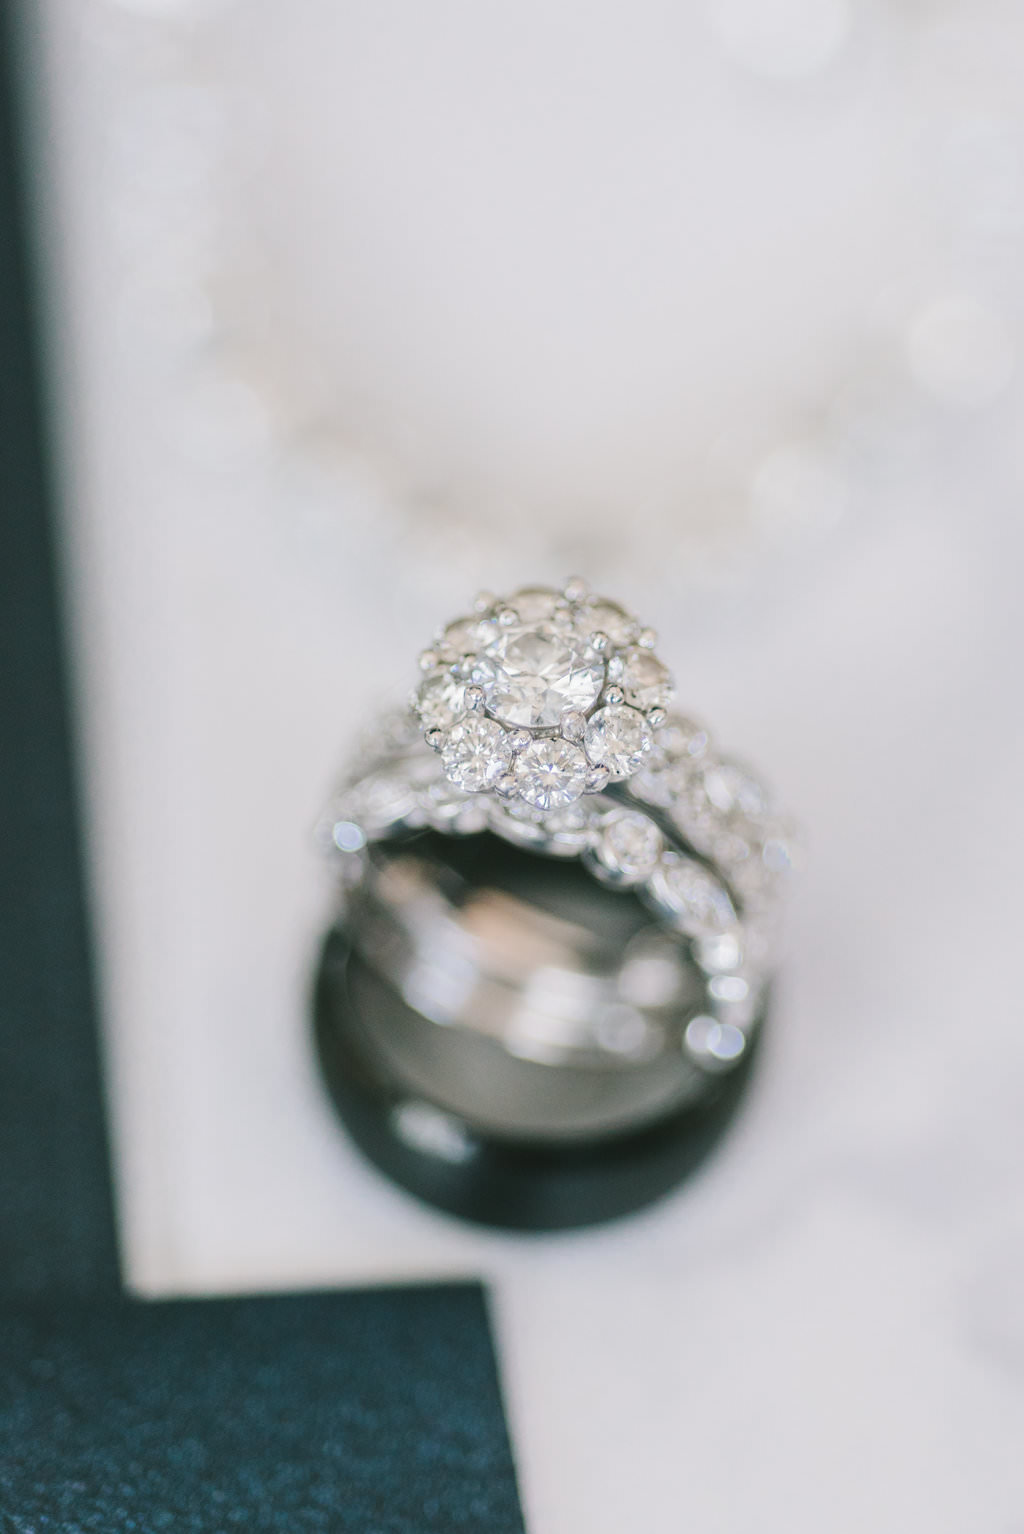 Round Halo Diamond Engagement Ring and Diamond Wedding Ring | Tampa Bay Wedding Photographer Kera Photography